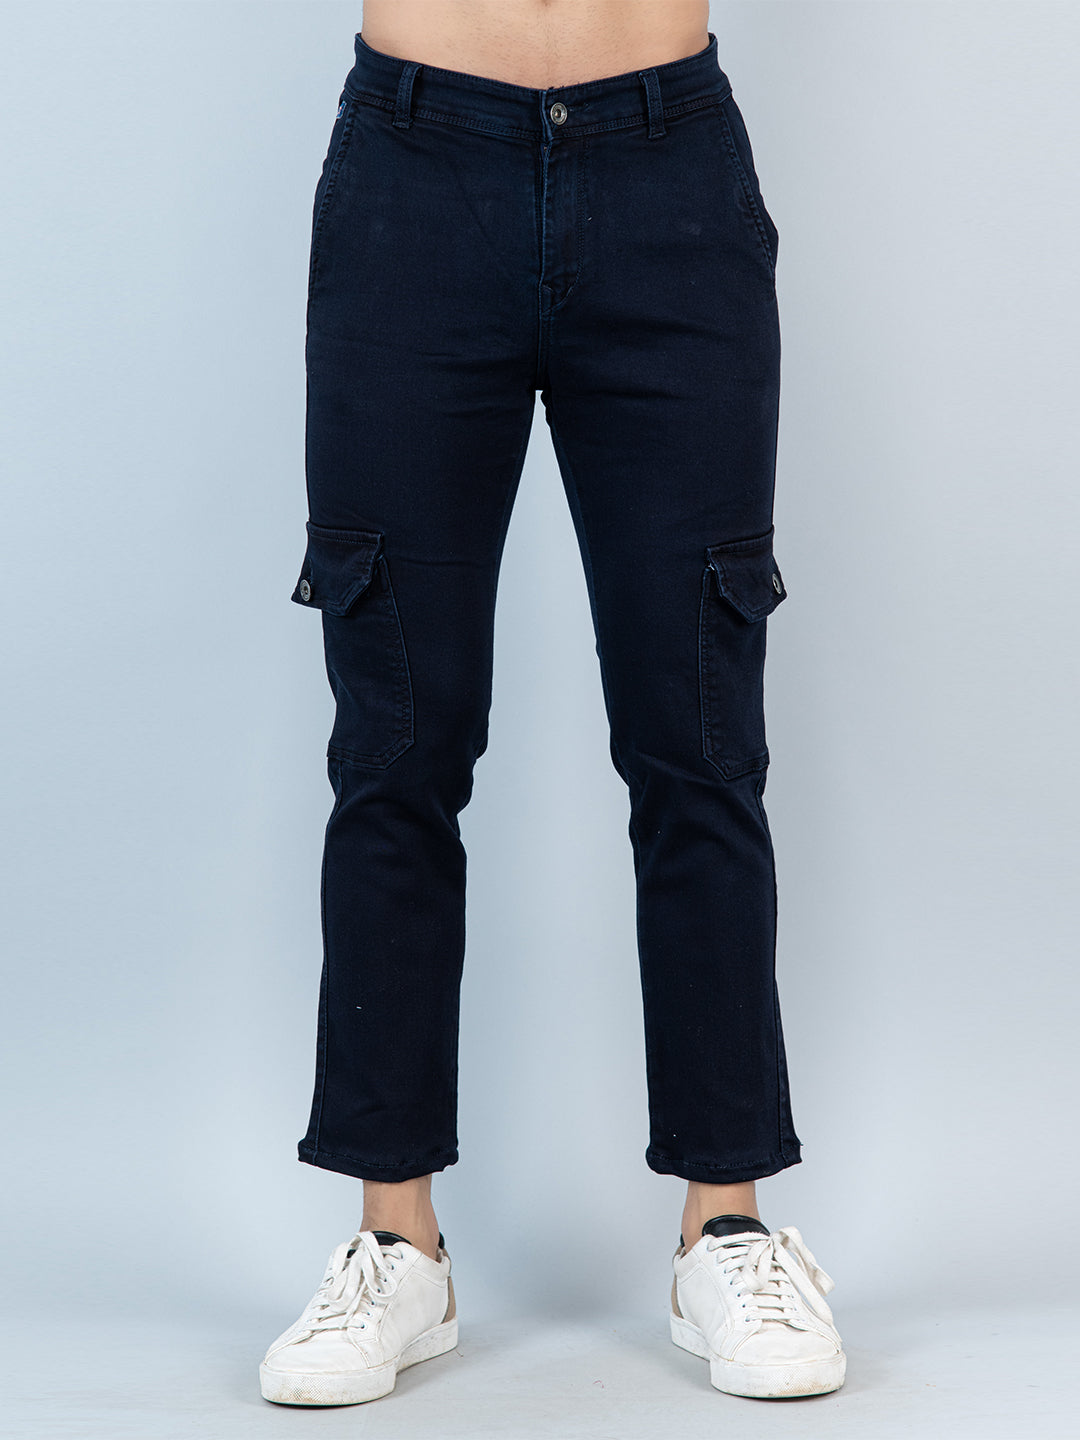 Kenz Navy Blue Pants for Men - Versatile & Stylish | Blue pants men, Navy  blue dress pants, Slim fit pants men